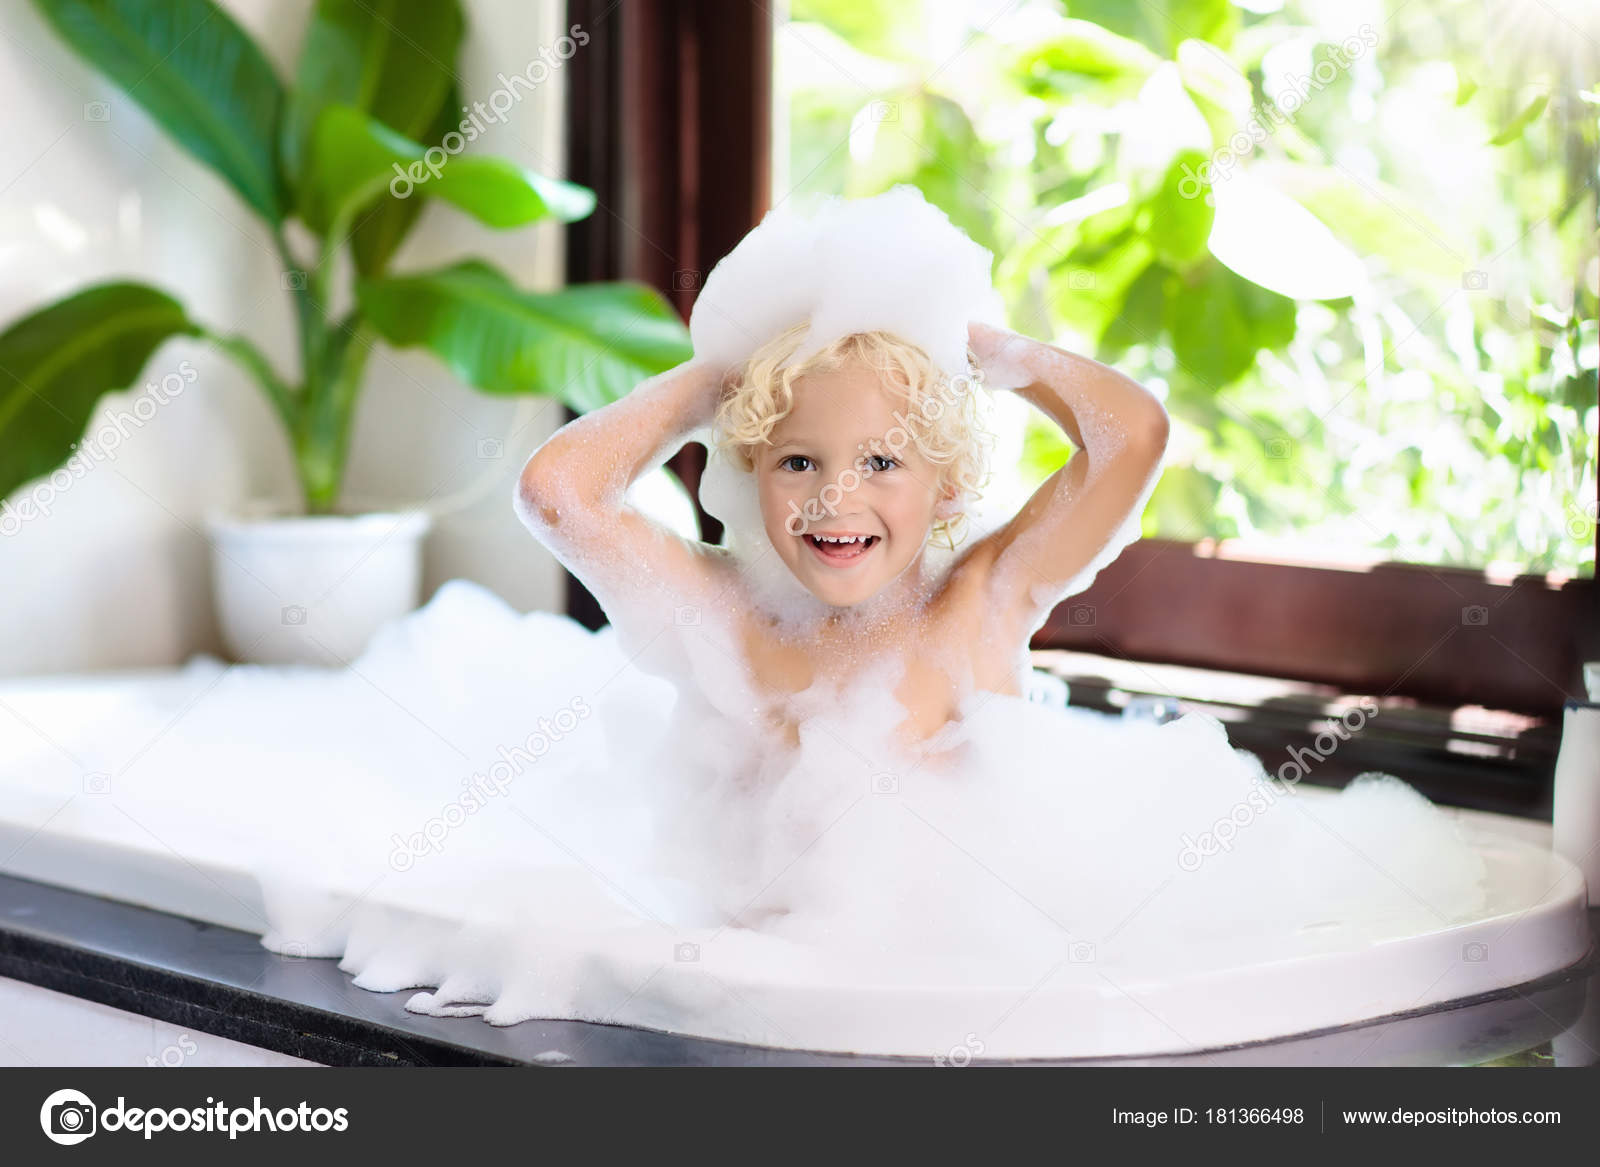 Kids Bubble Bath Photos, Images and Pictures